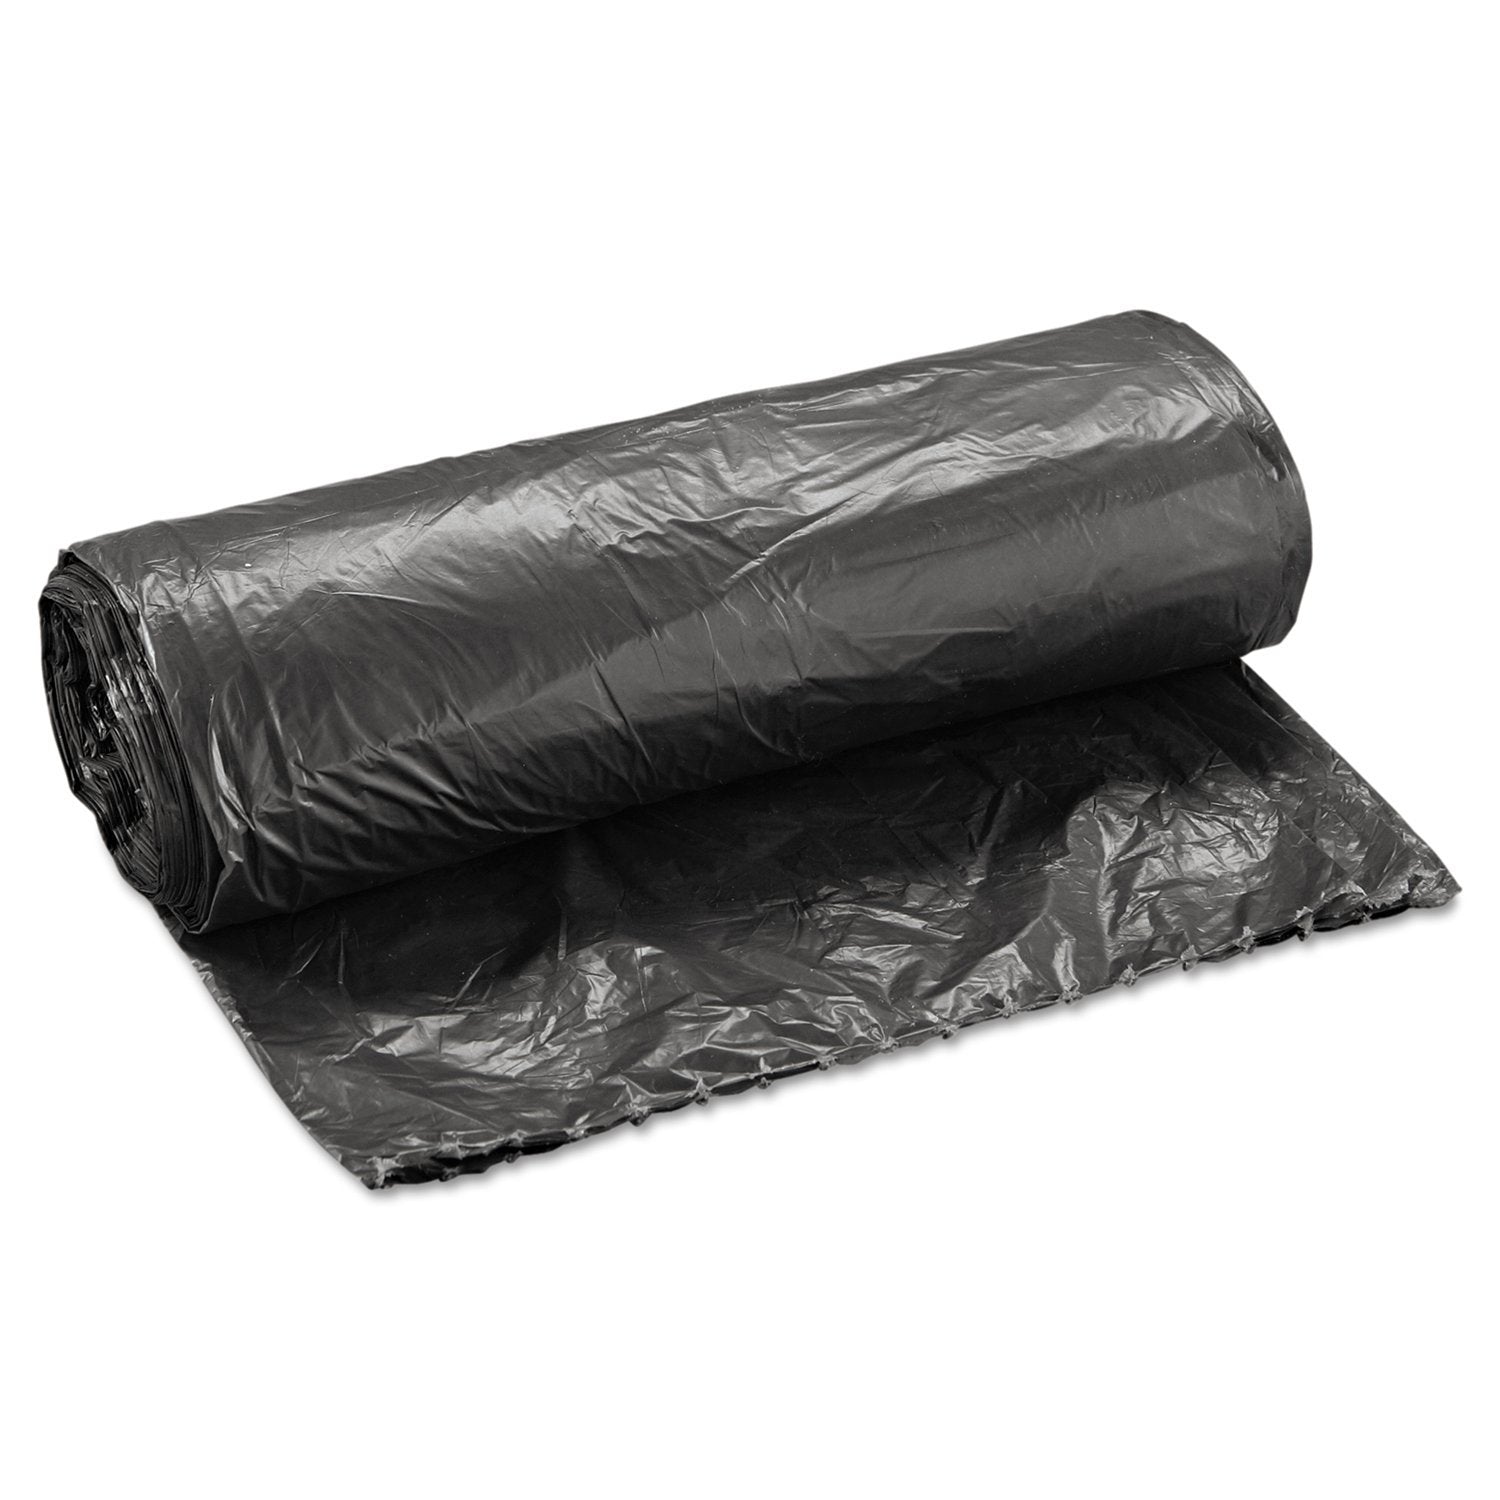 12-16 Gallon Trash Bags, 24 x 32, Black, 500 Per Case, Folded